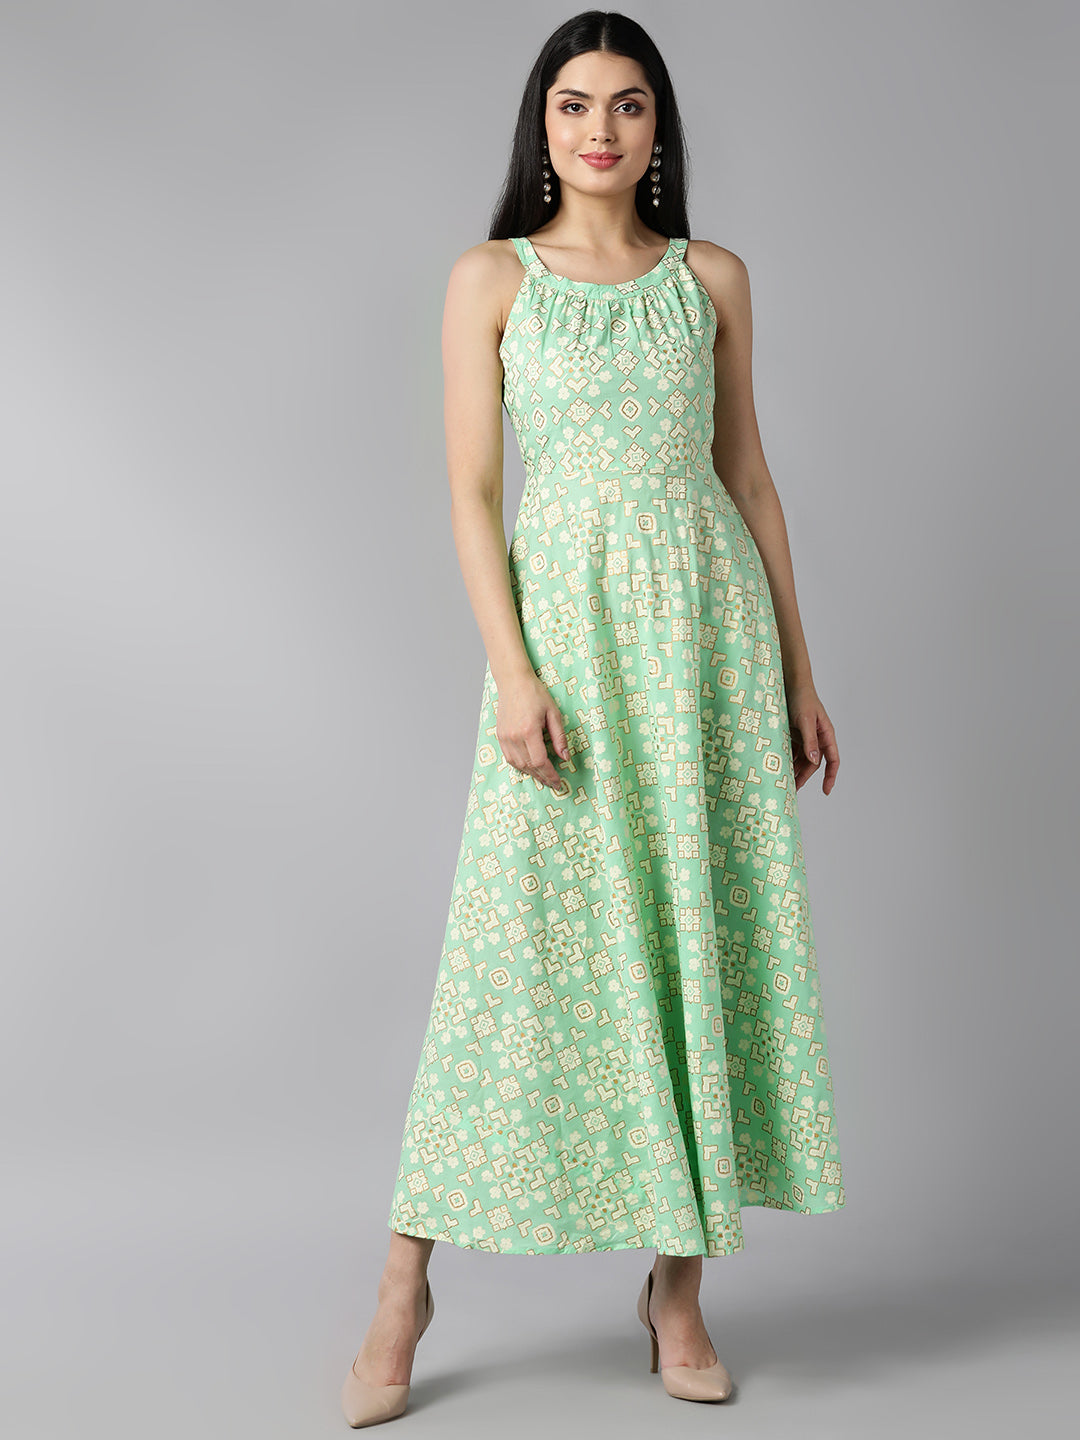 Women's Green Cotton Floral Printed Dress  - Ahika